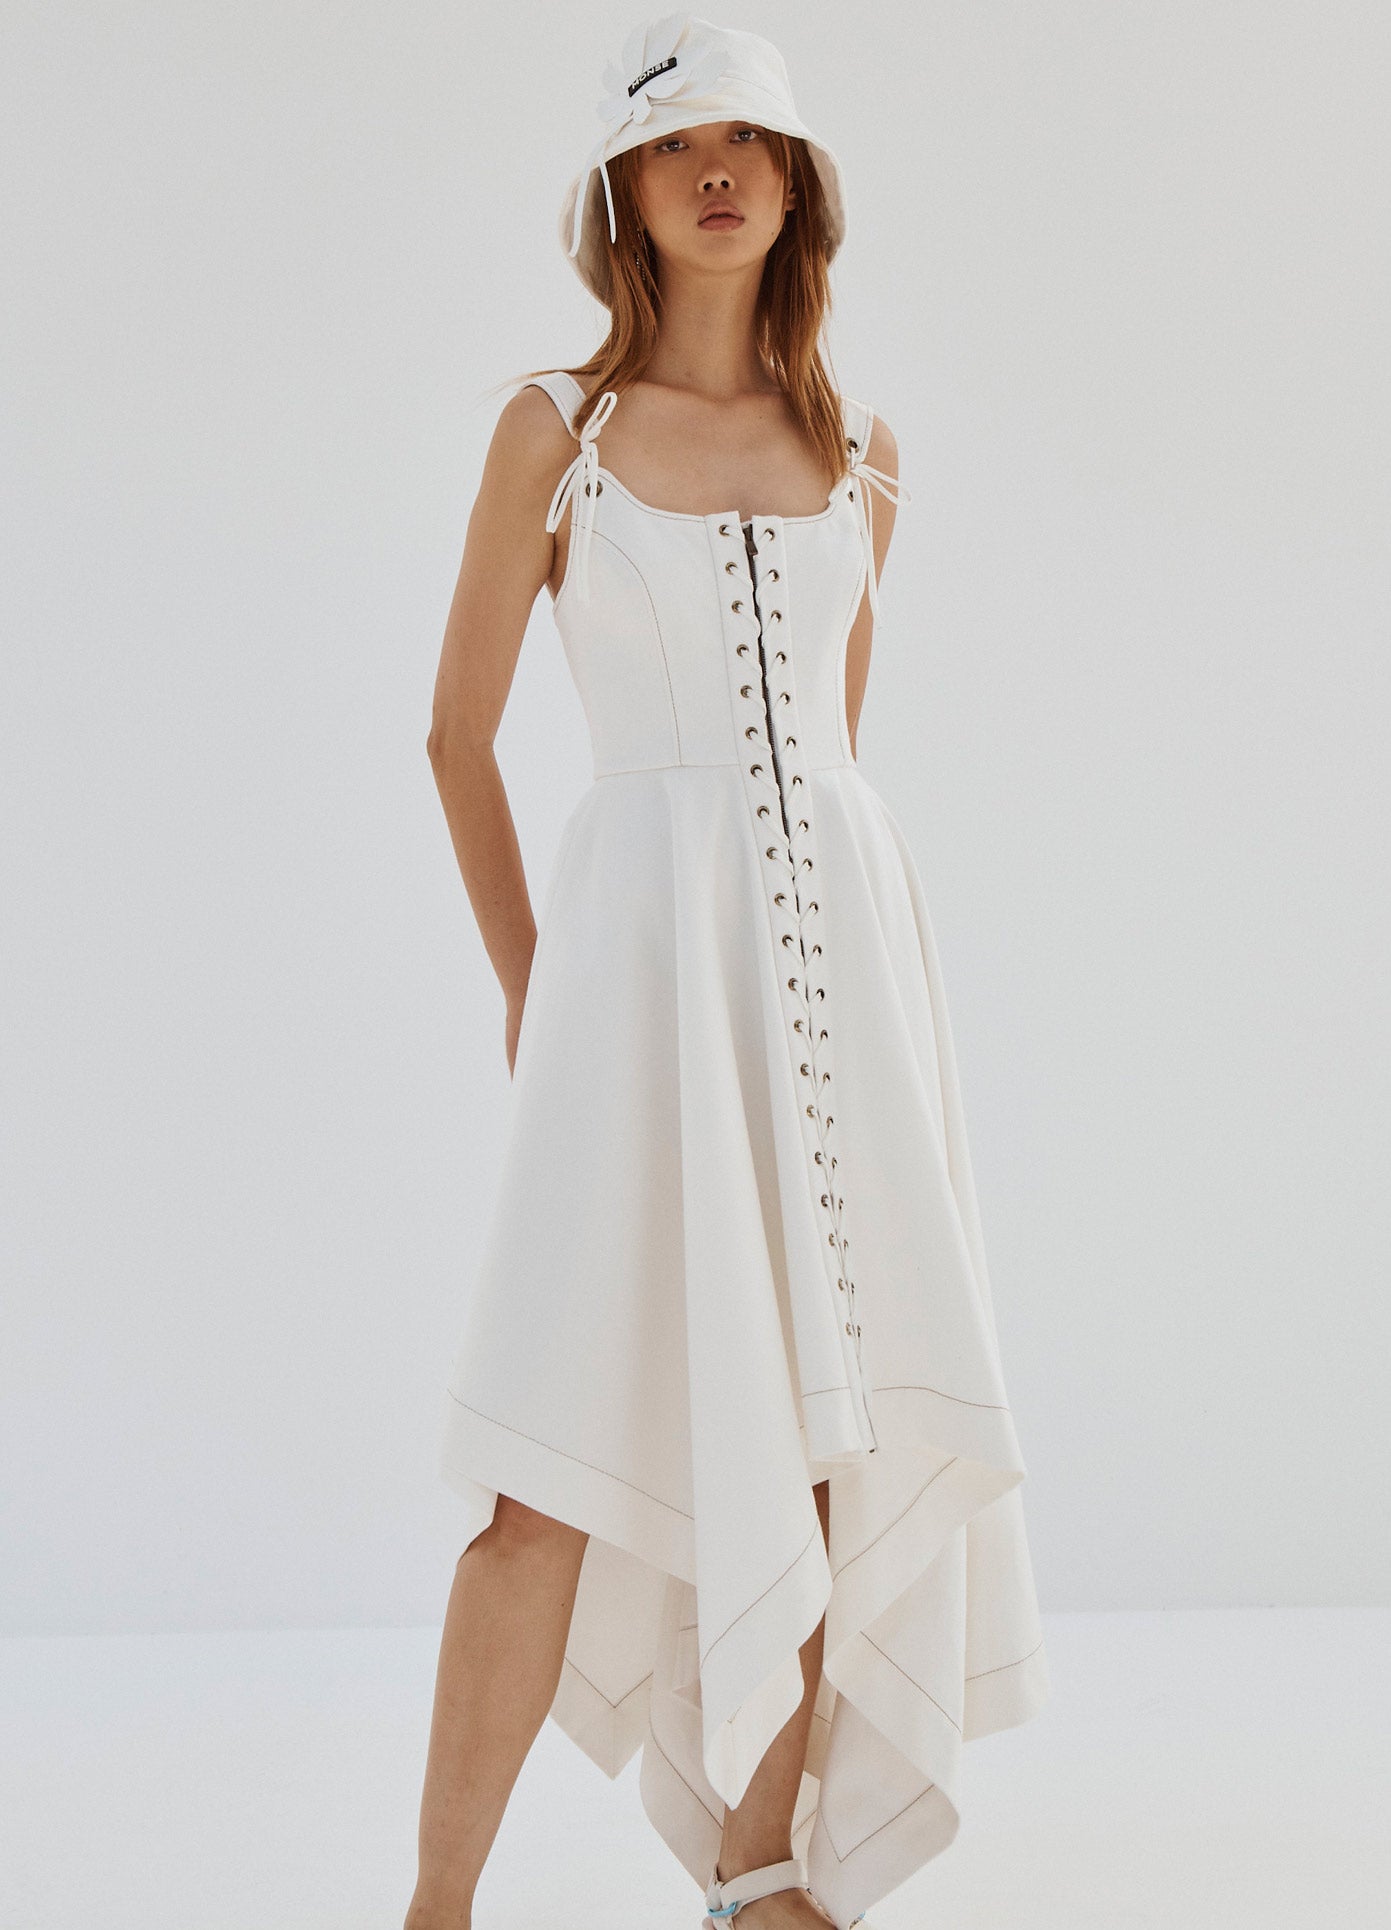 MONSE Laced Front Sleeveless Denim Dress in White on Model Full Front View